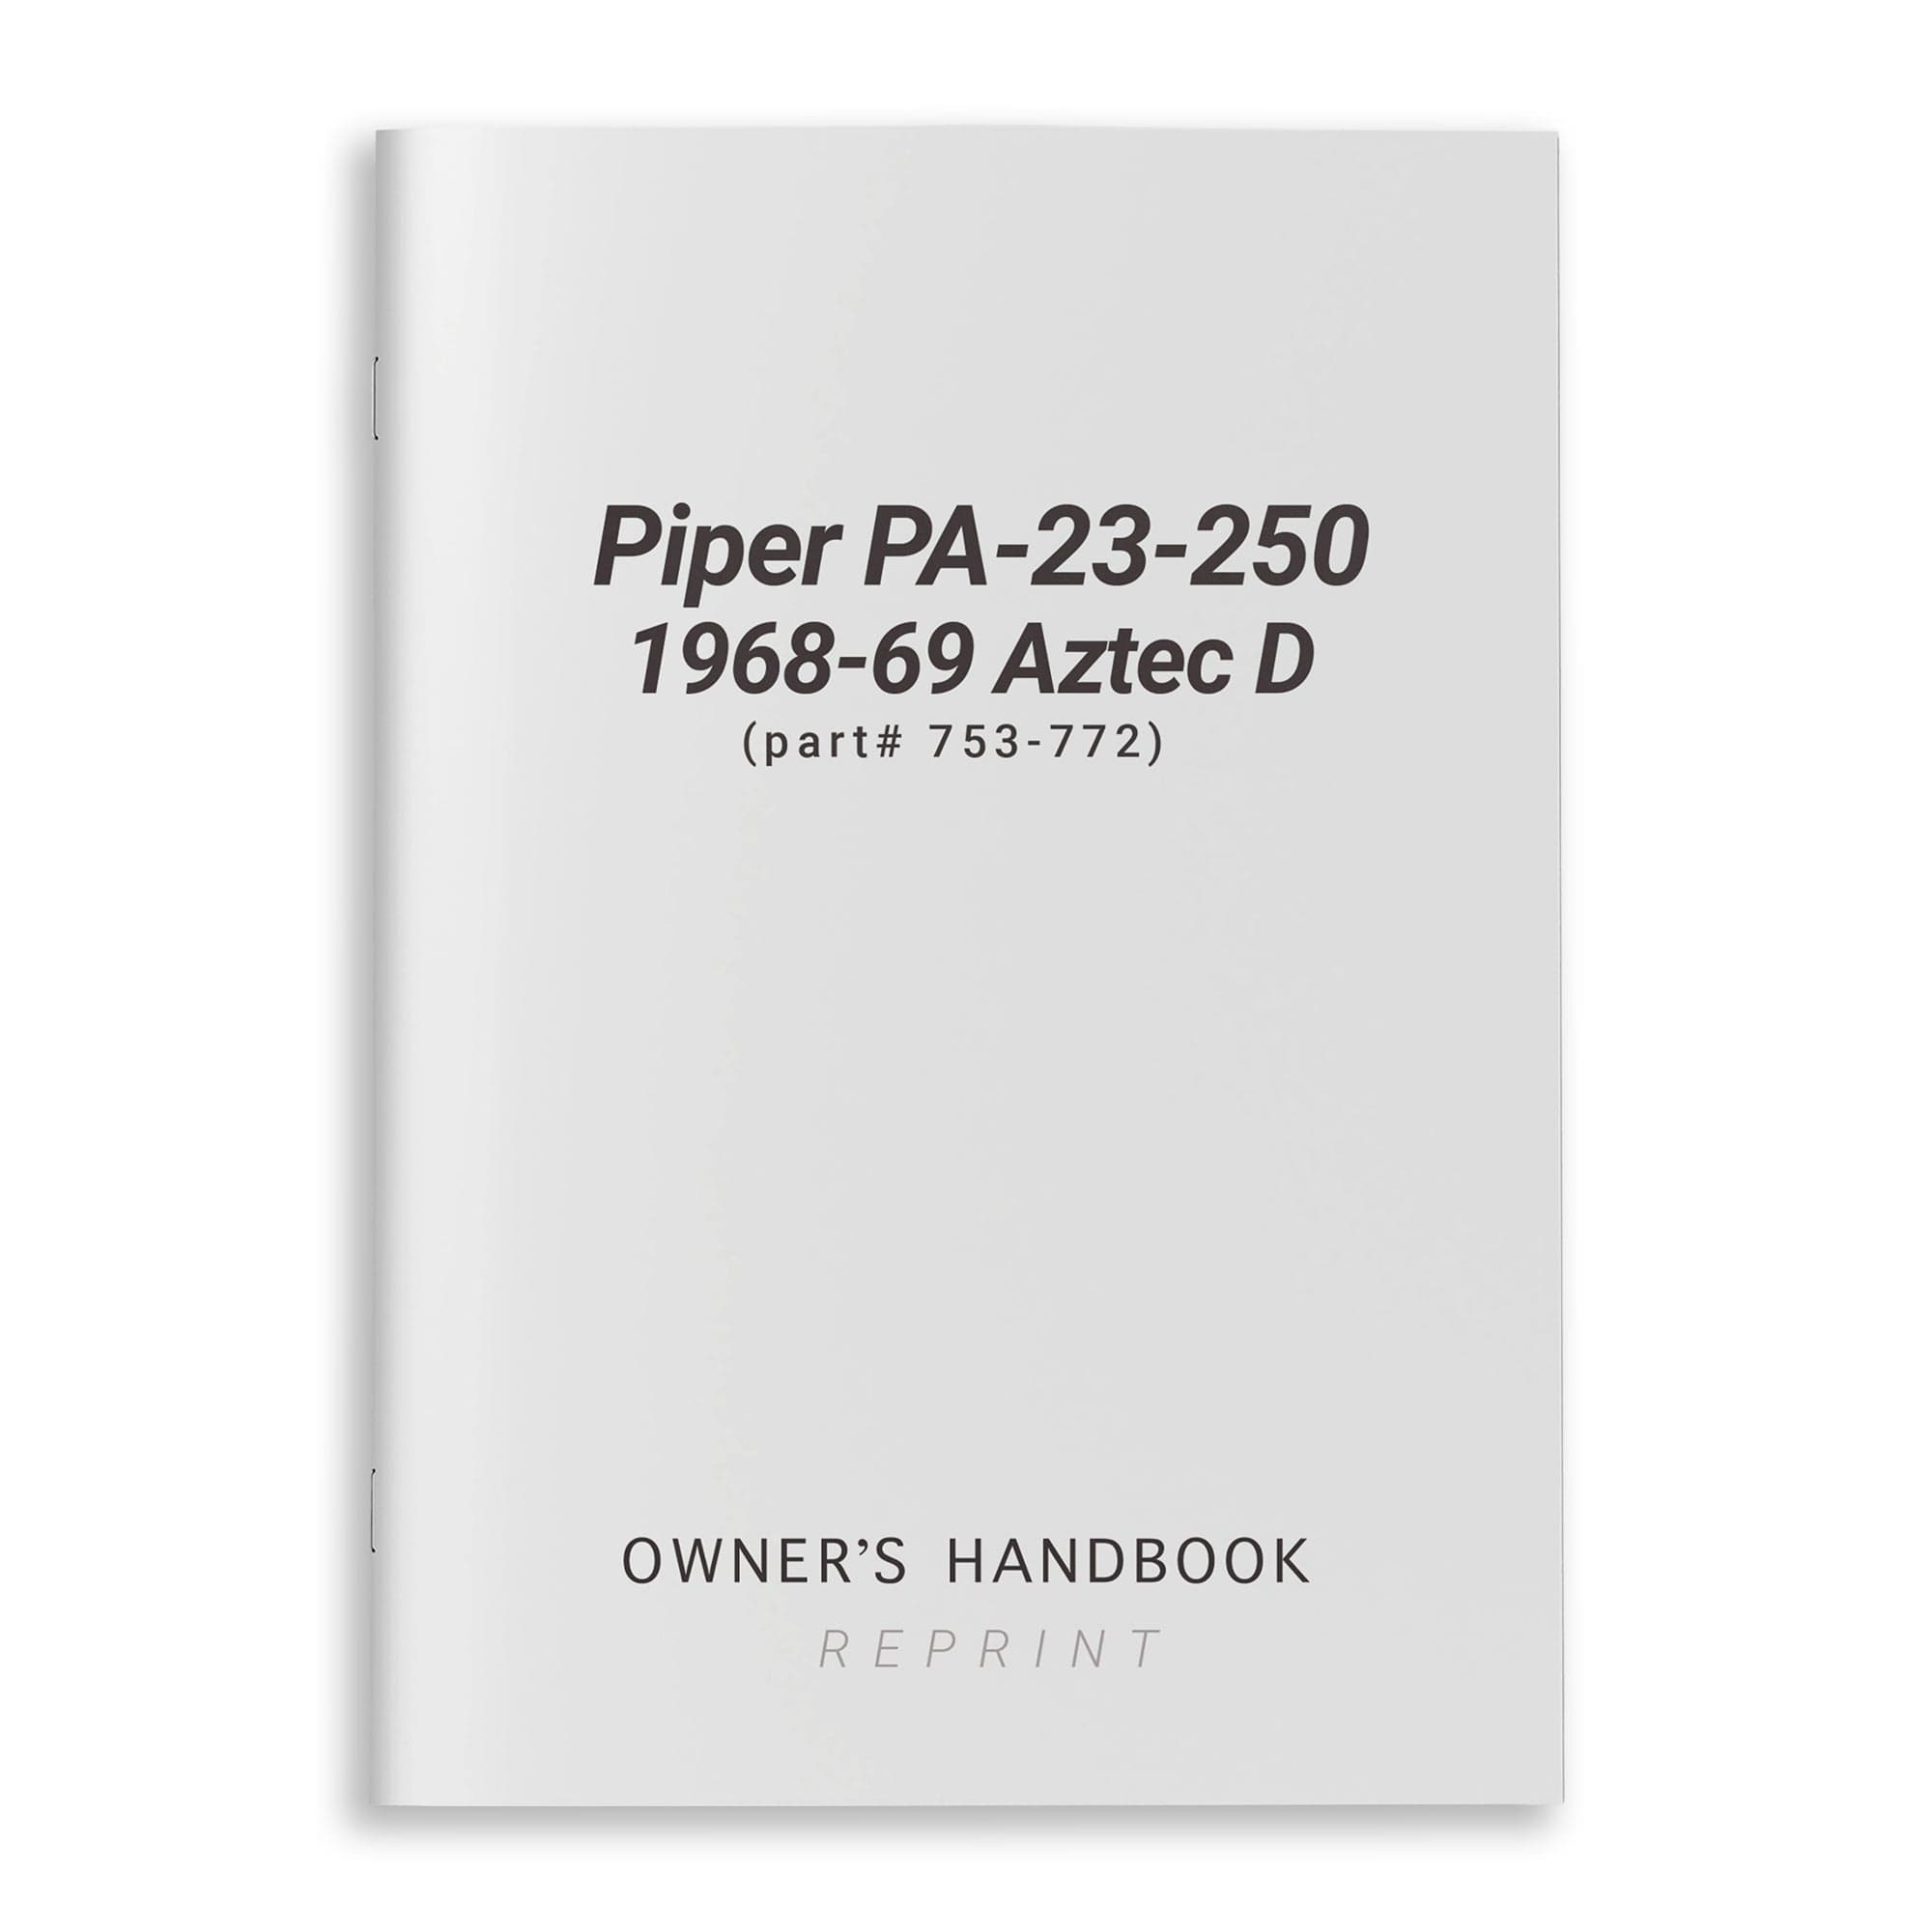 Piper PA-23-250 1968-69 Aztec D Owner's Handbook (part# 753-772)